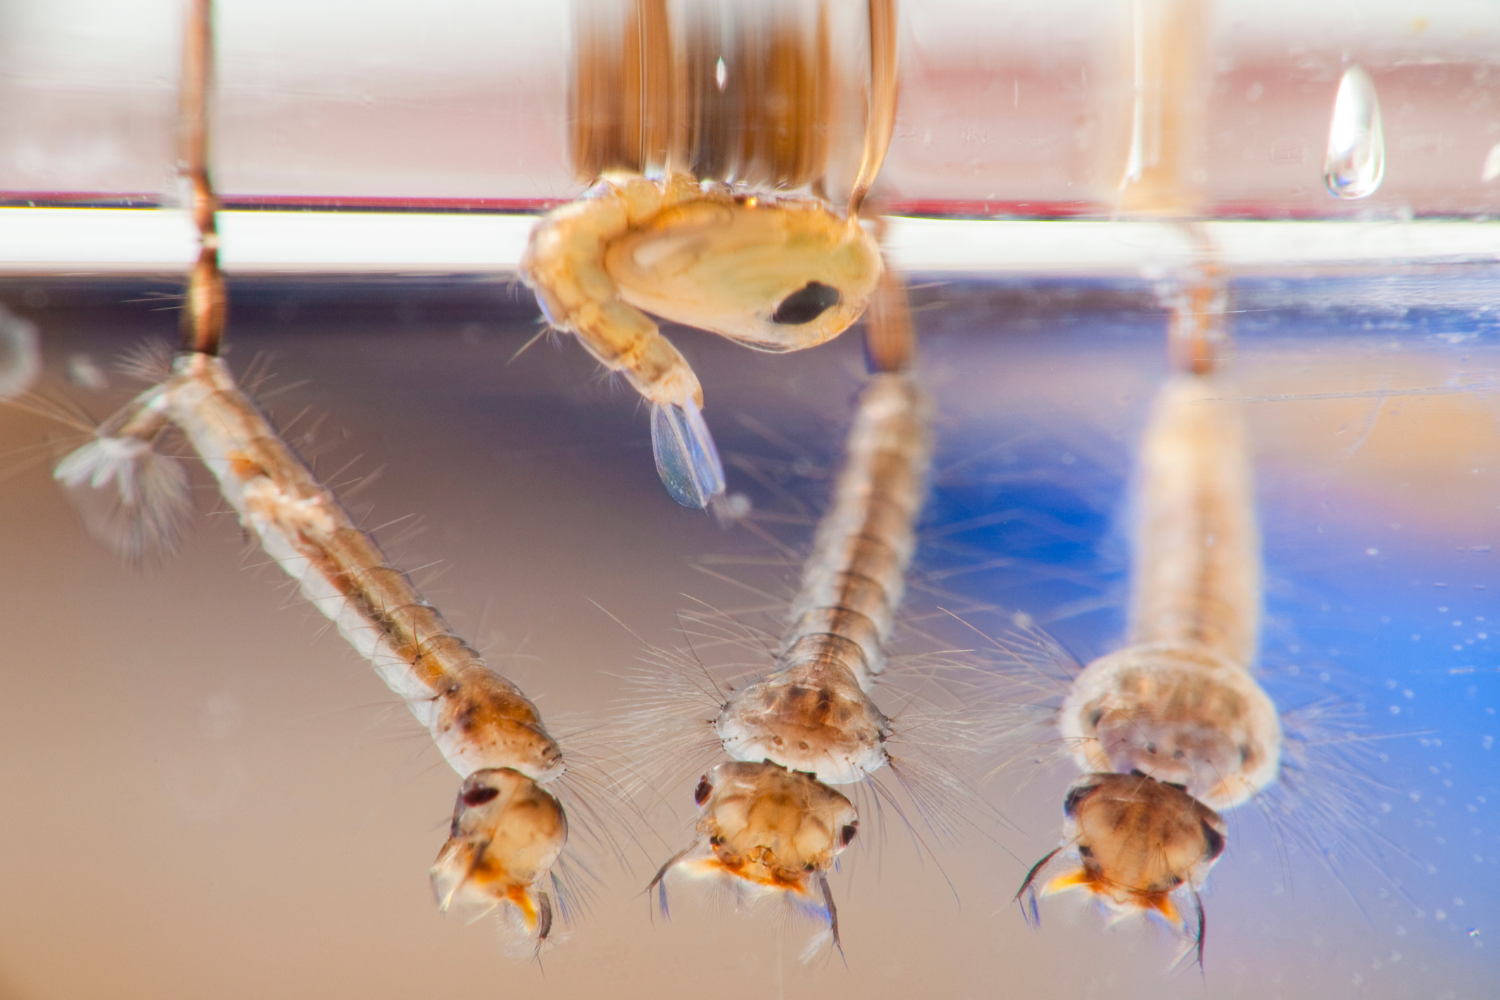 mosquito larvae and pupae